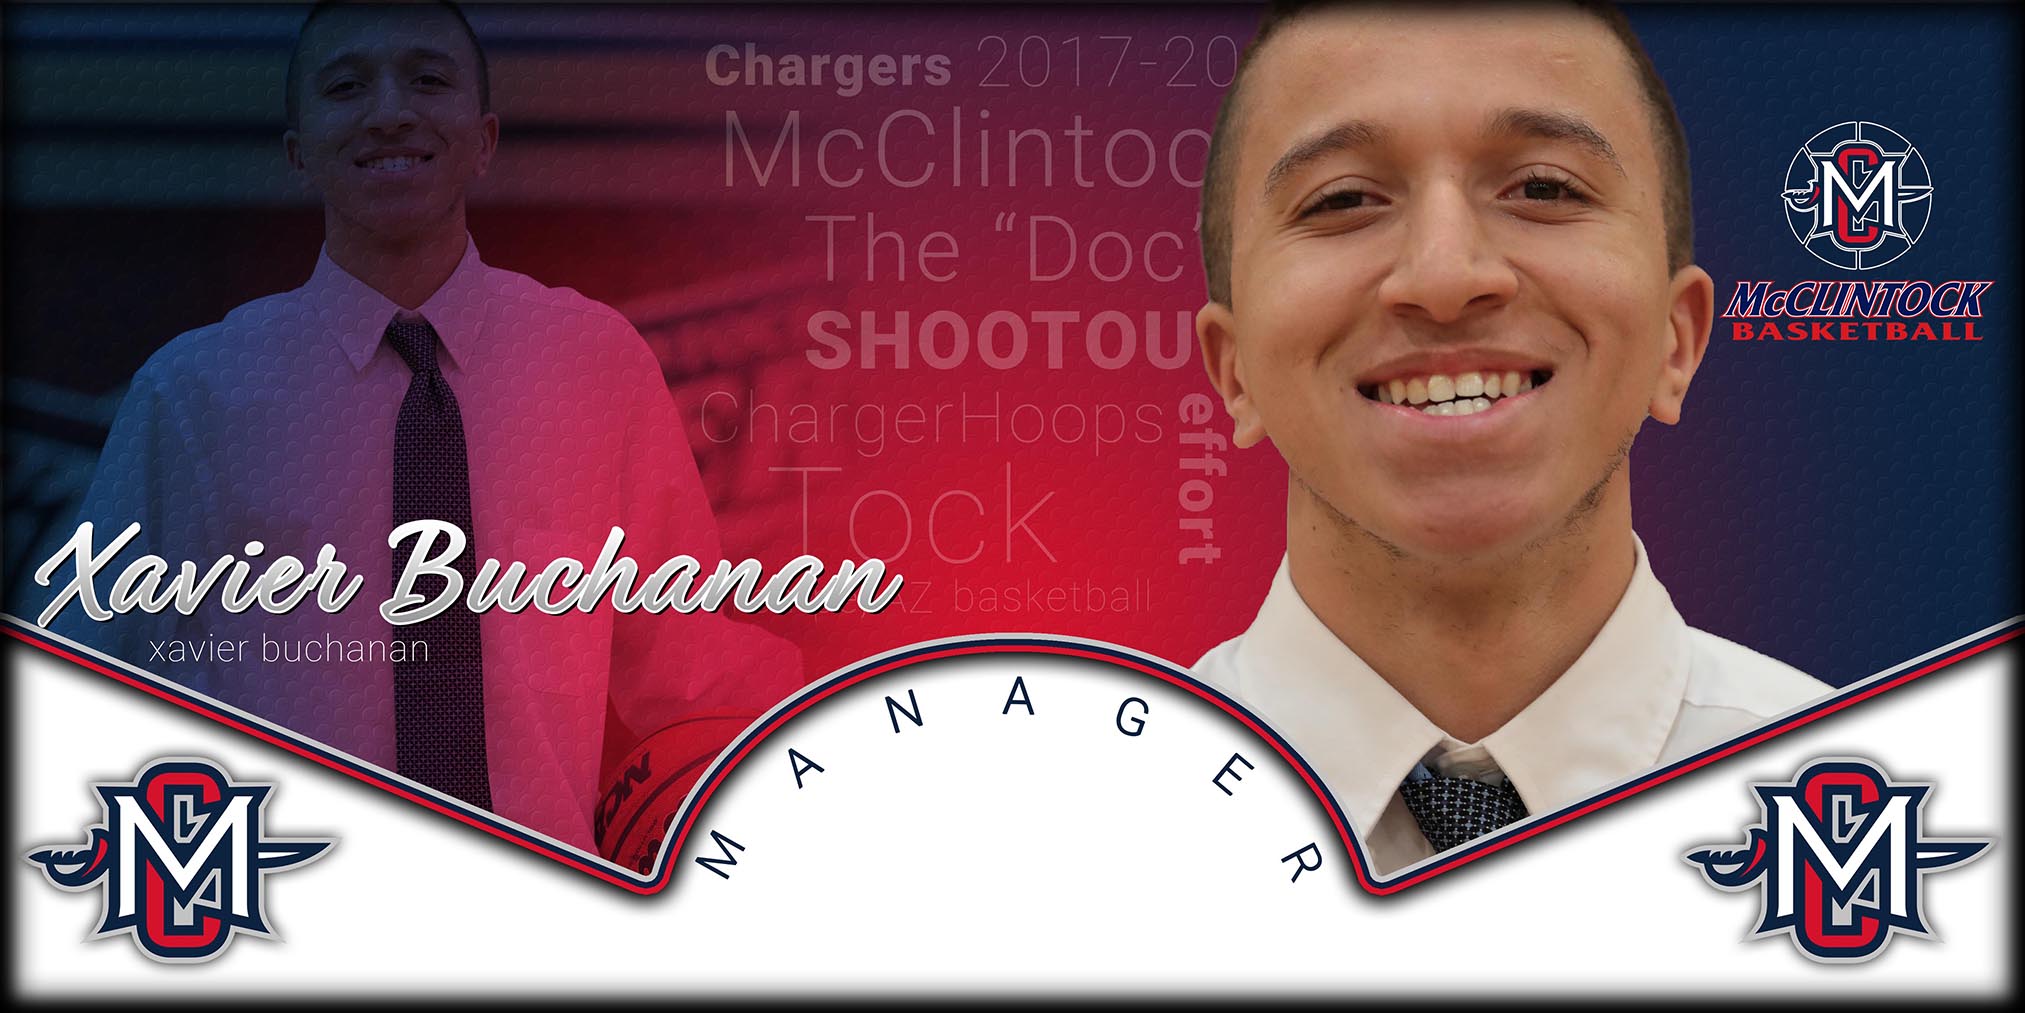 McClintock Chargers Basketball- Armani Williams